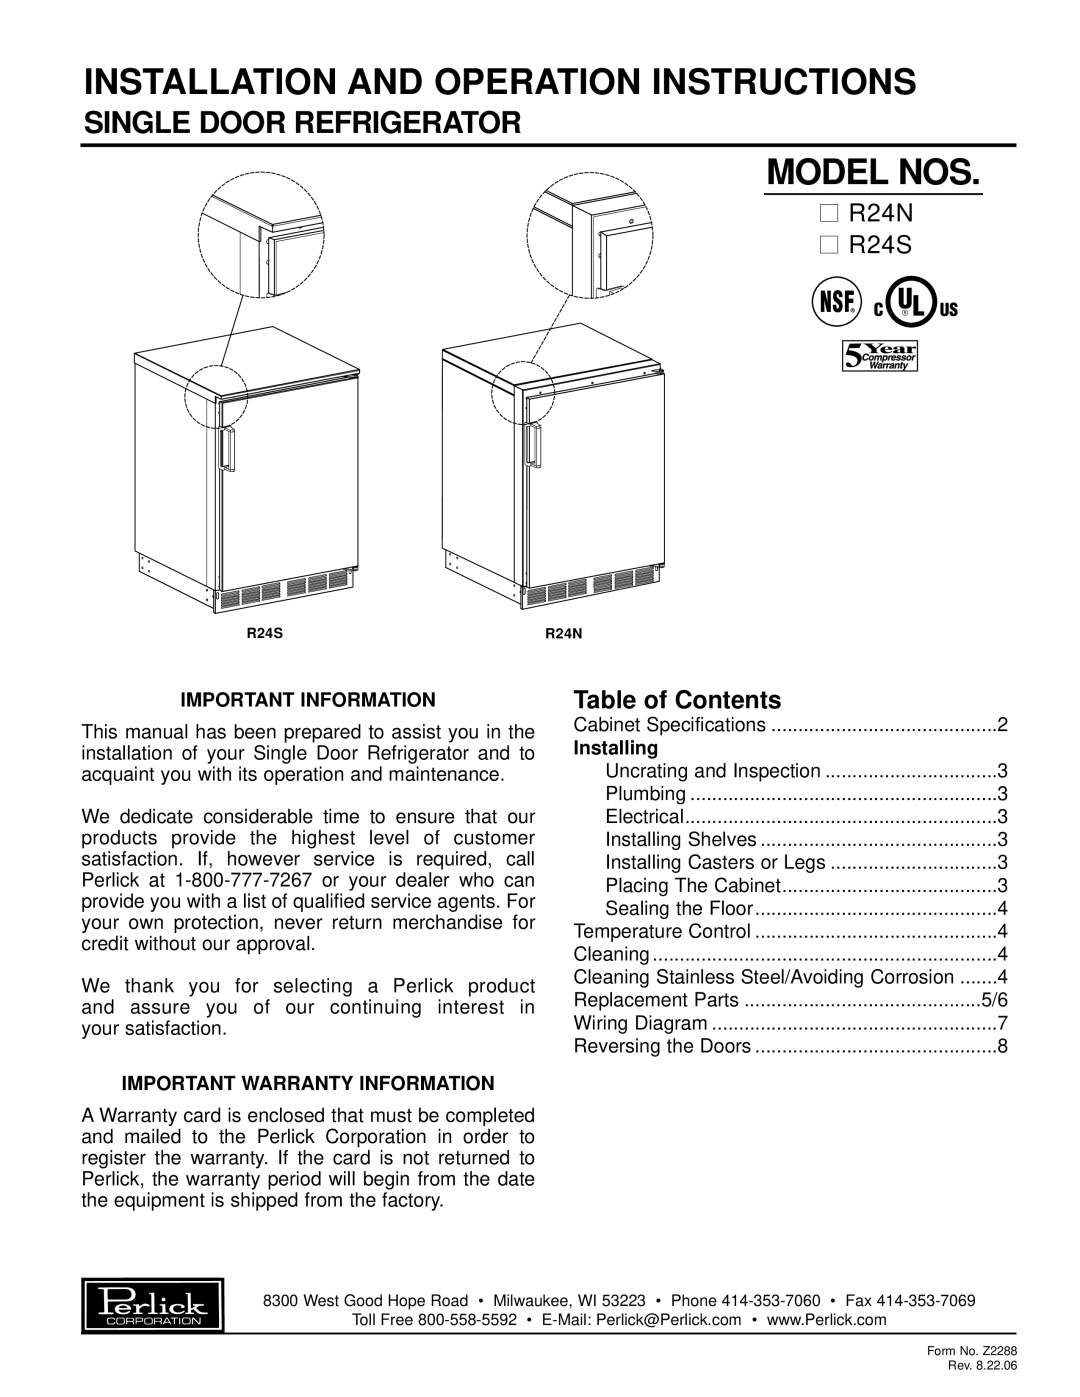 Perlick specifications Installation And Operation Instructions, Model Nos, Single Door Refrigerator, R24N R24S 